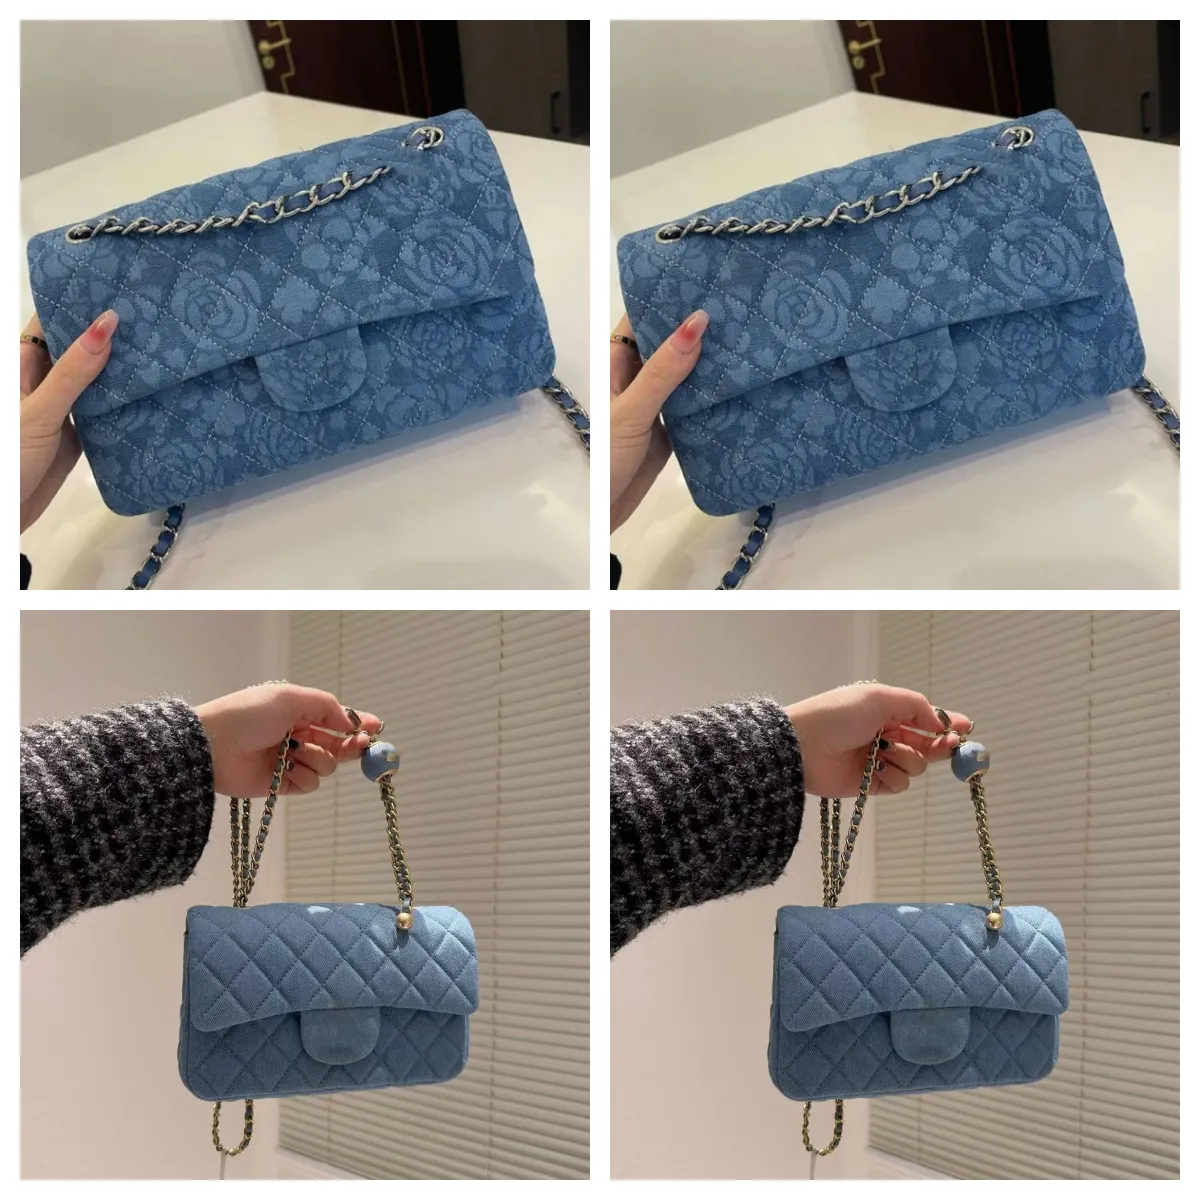 5a luxury denim bags designer women bag vintage cc handbag bag